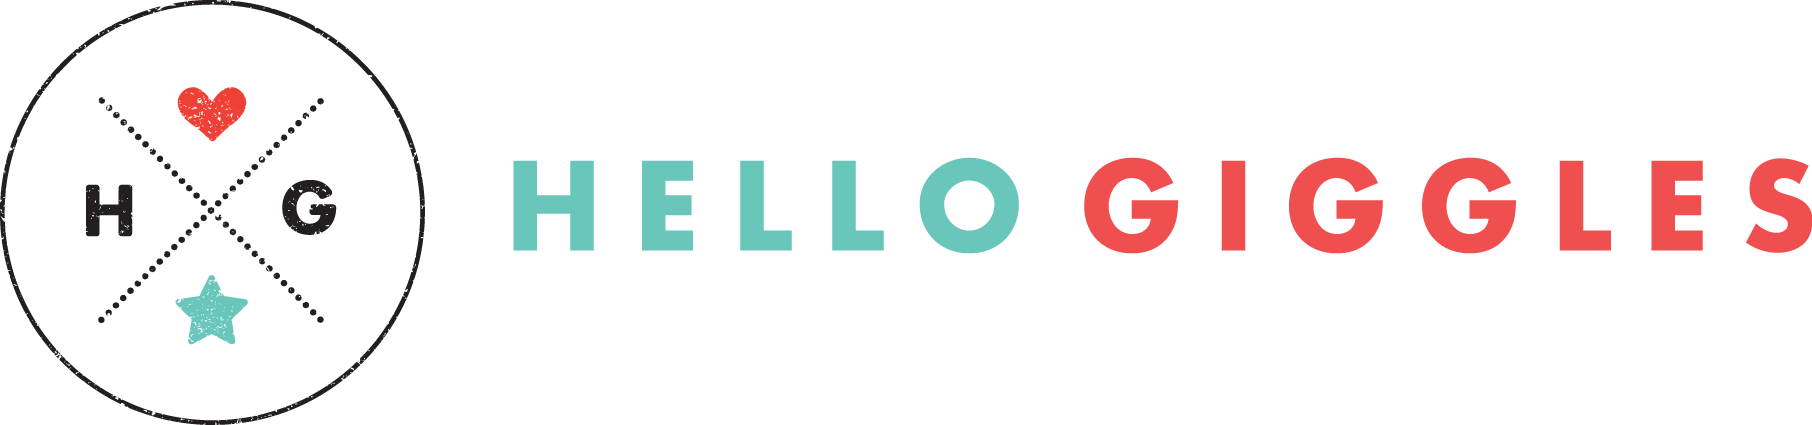 hello-giggles logo